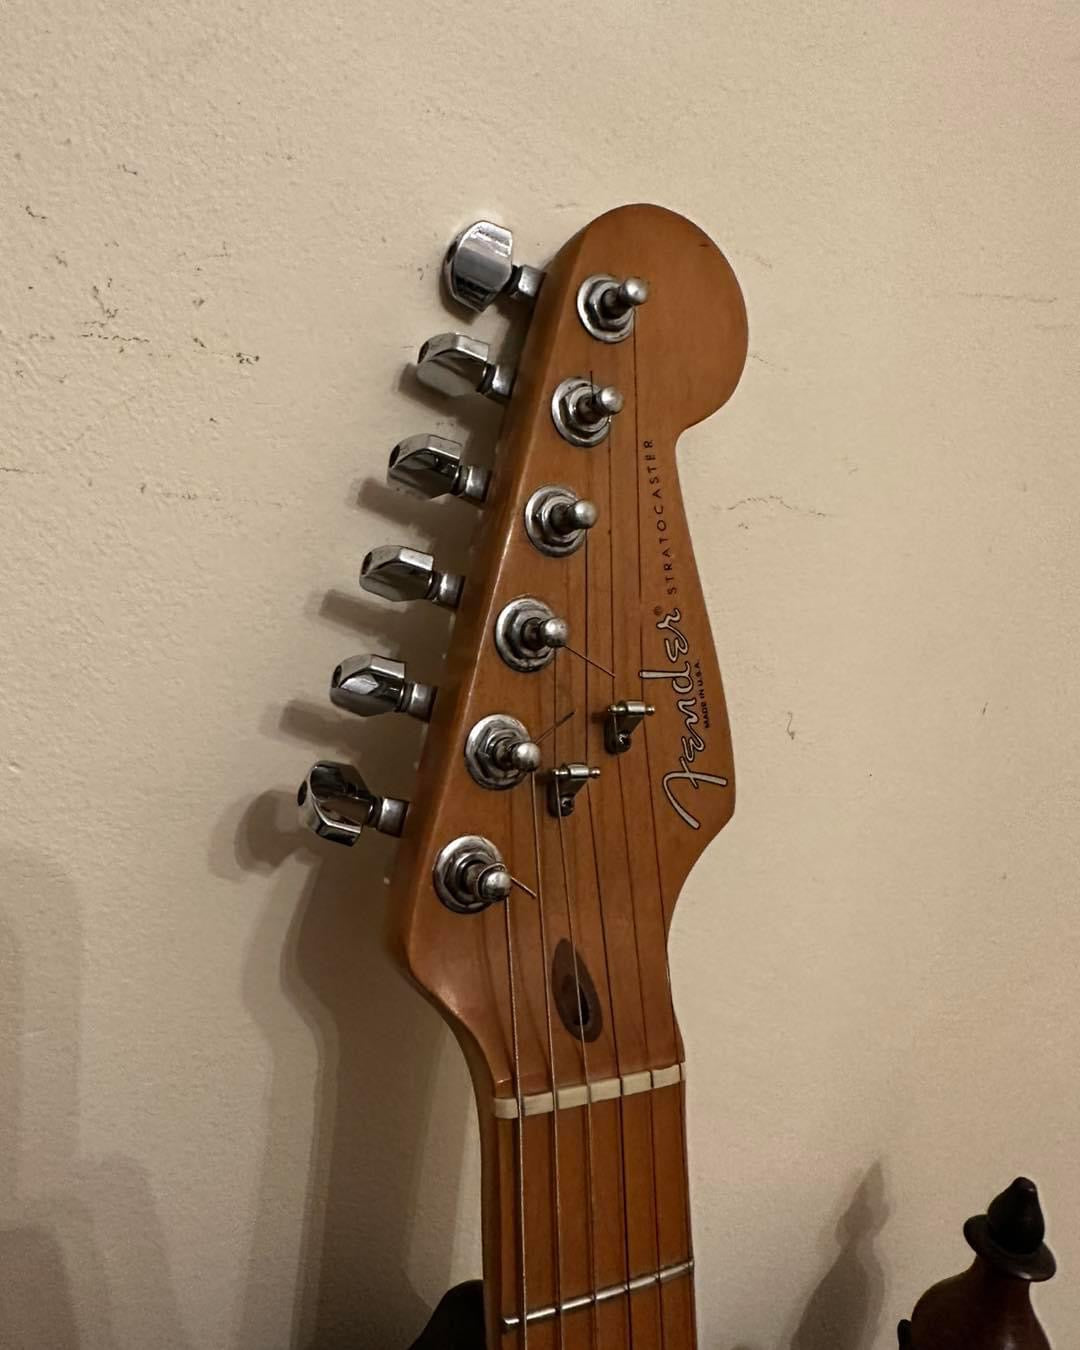 Fender American Standard 50th anniversary “Black Strat” Stratocaster Electric Guitar